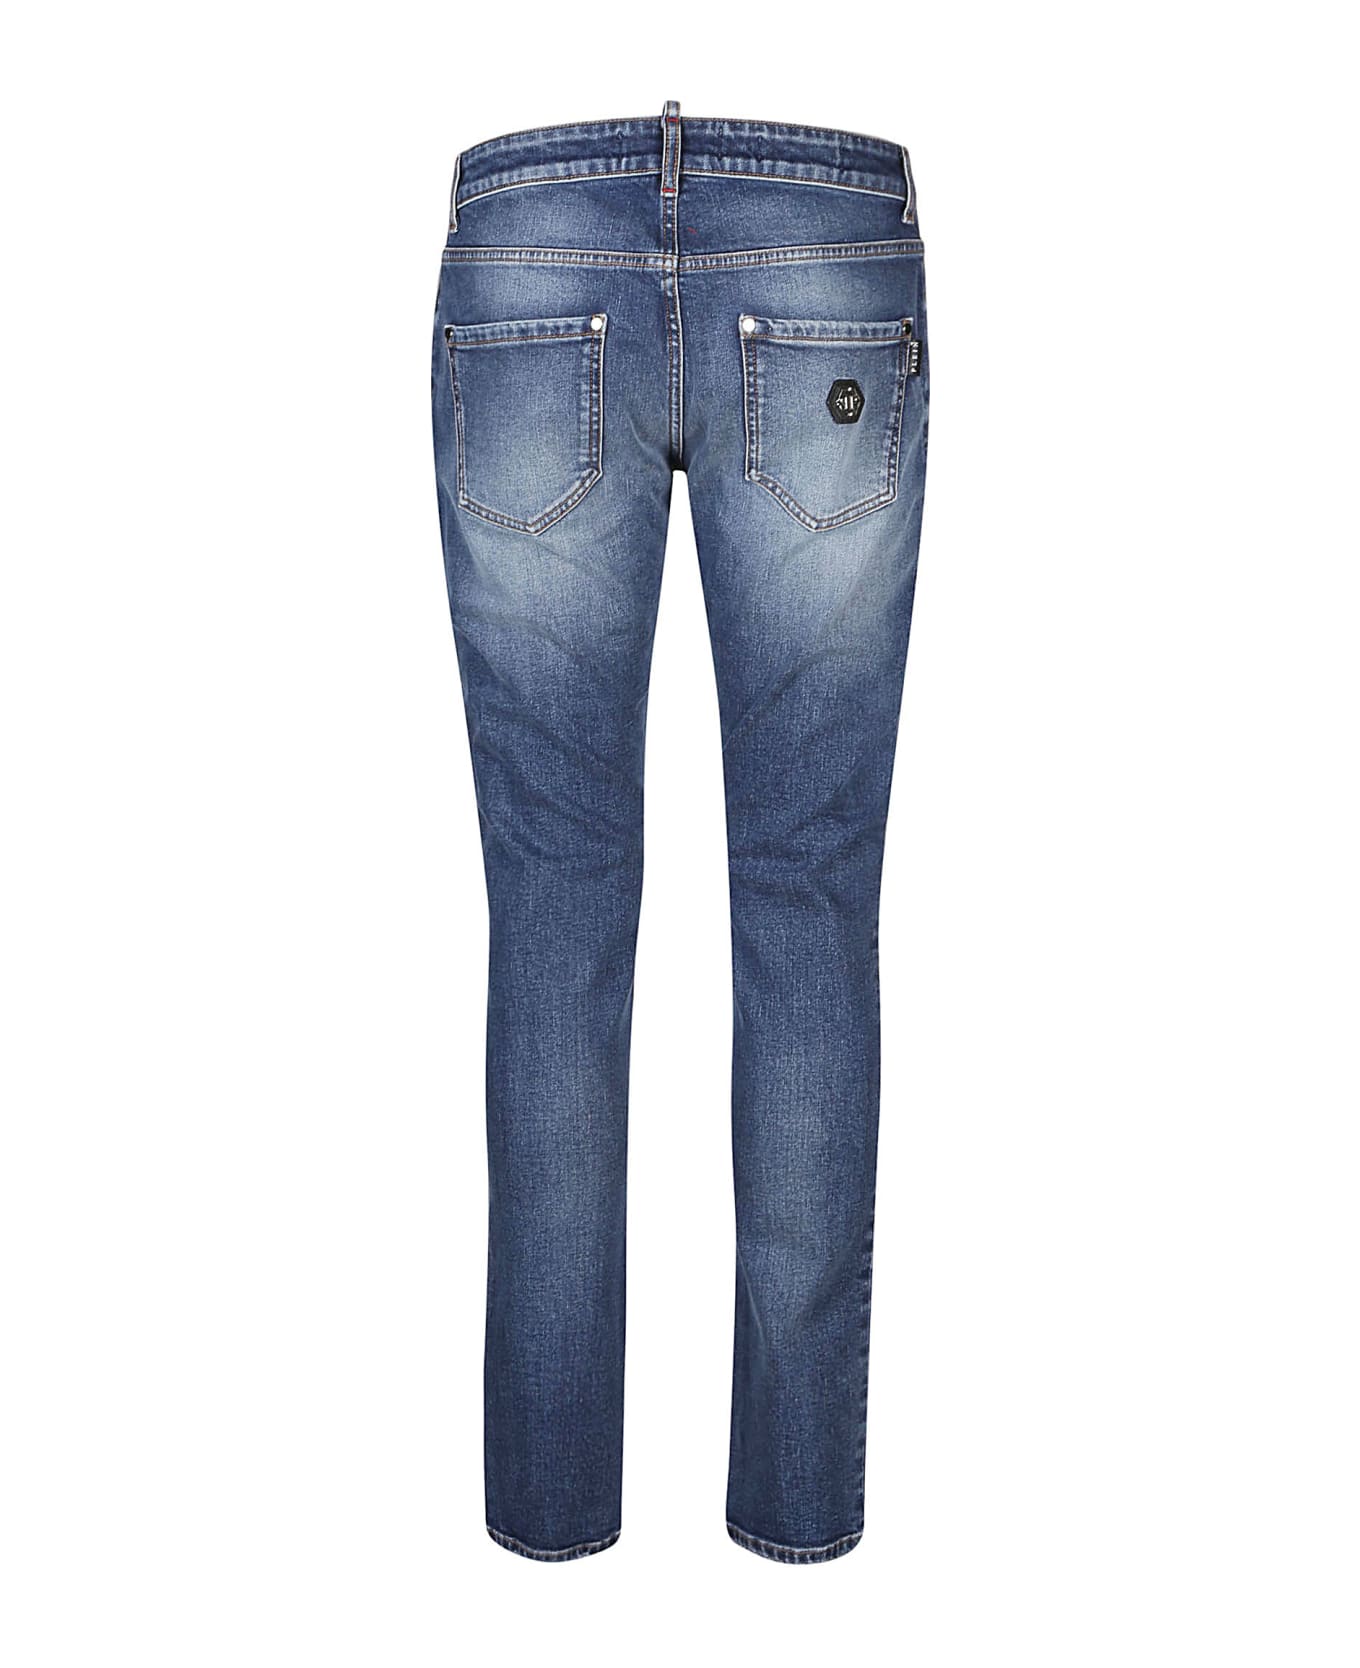 Philipp Plein Super Straight Cut Jeans - Bm Blue Marlin